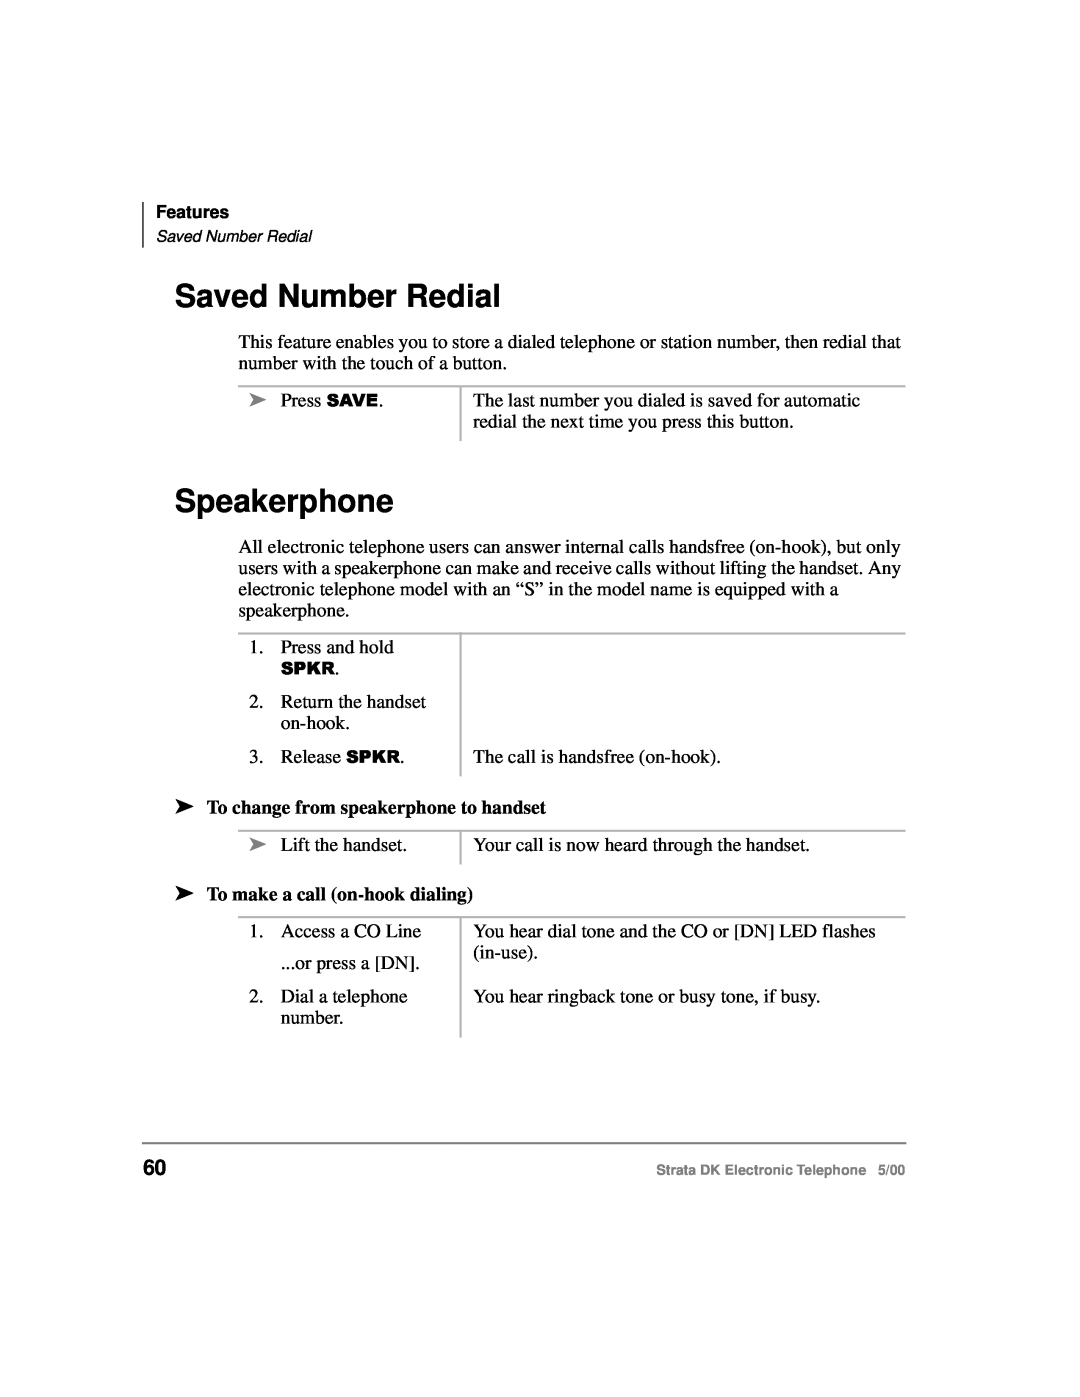 Toshiba Strata DK manual Saved Number Redial, Speakerphone, To change from speakerphone to handset 